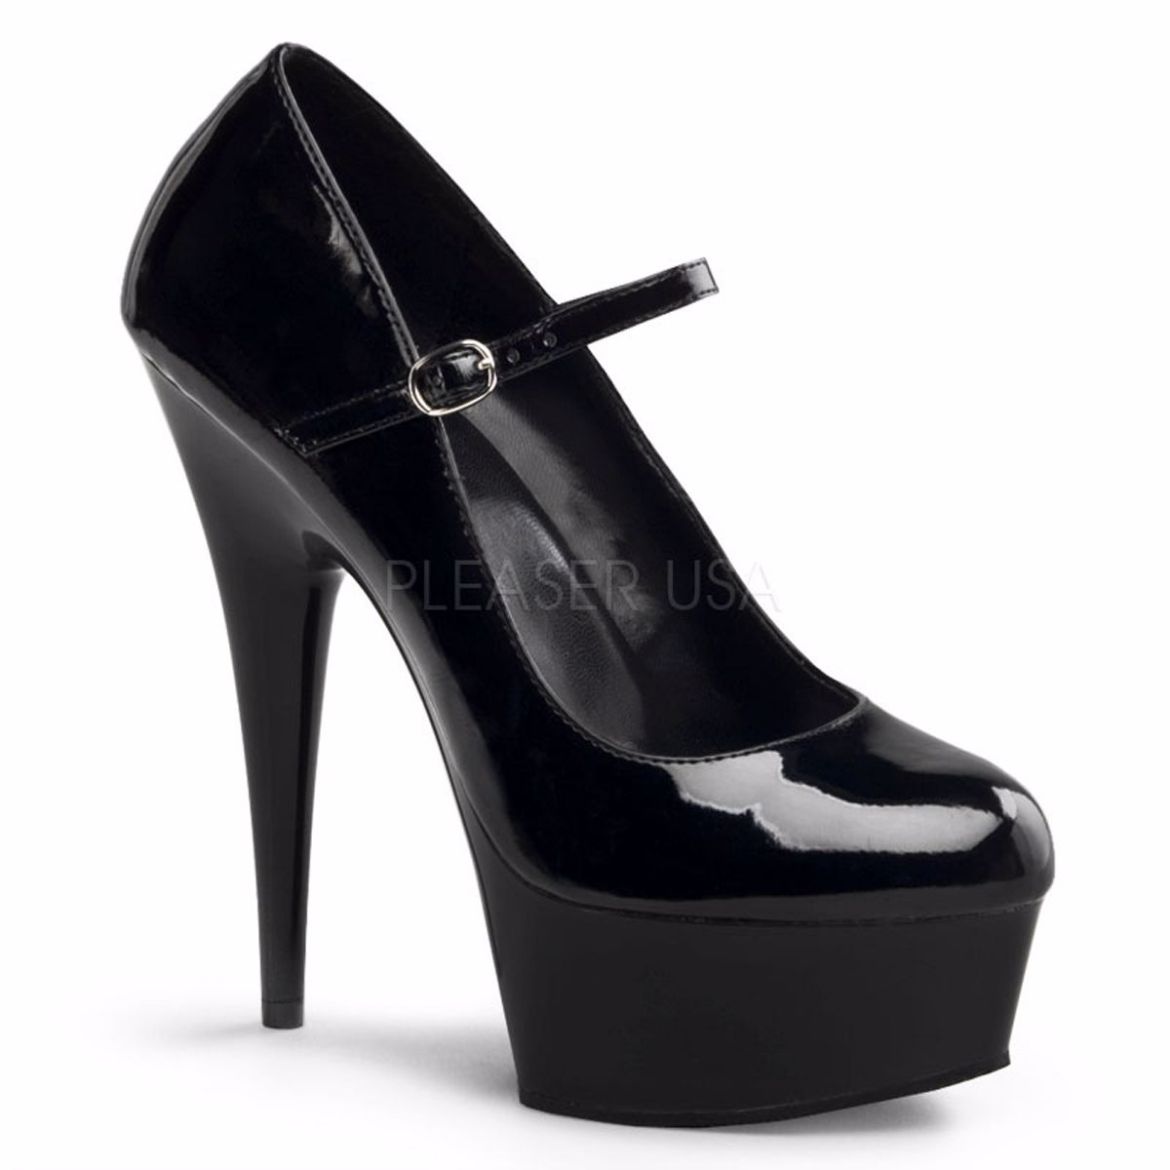 Product image of Pleaser Delight-687 Black Patent/Black, 6 inch (15.2 cm) Heel, 1 3/4 inch (4.4 cm) Platform Court Pump Shoes